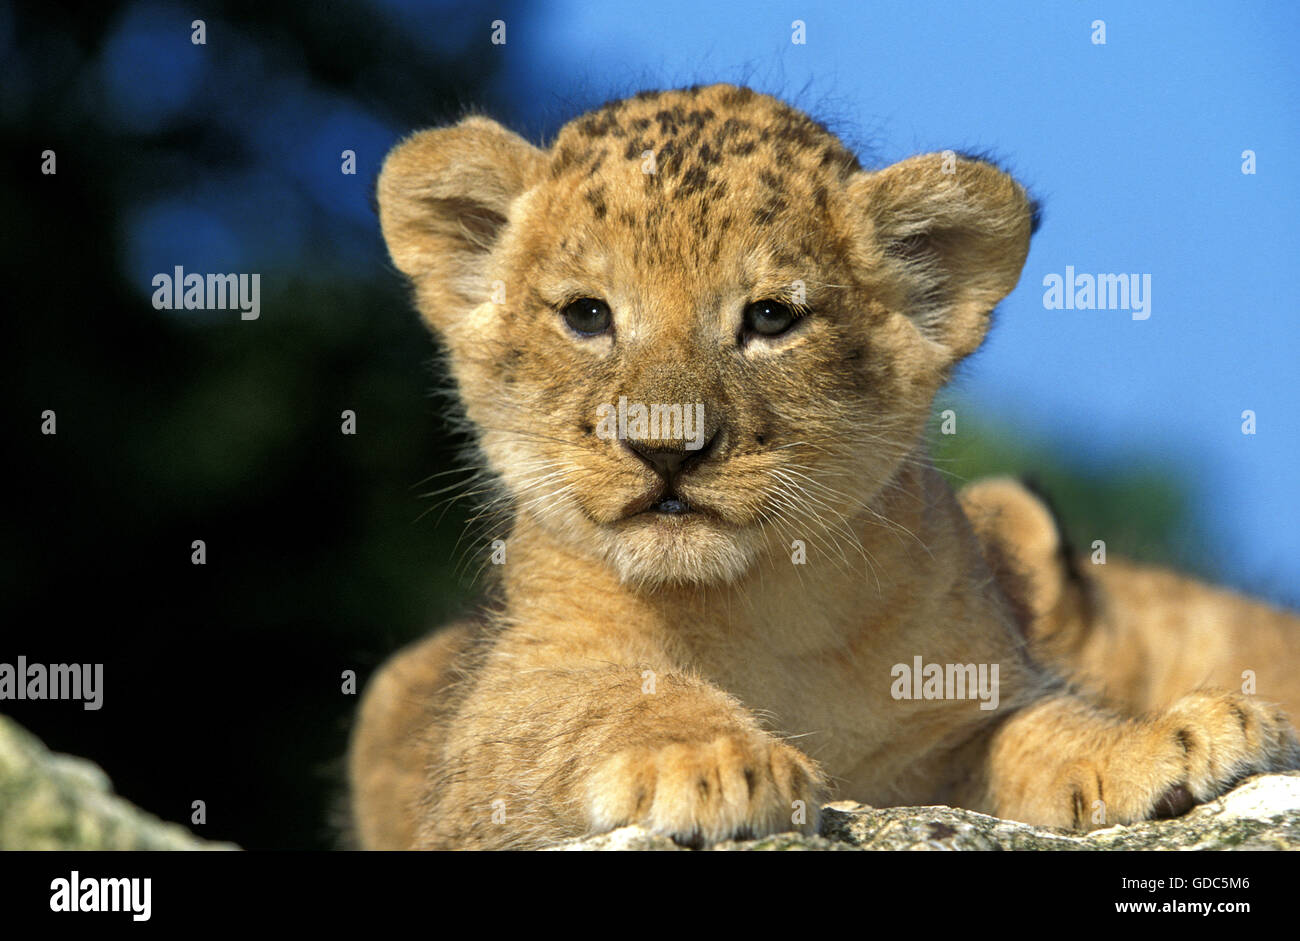 African Lion, panthera leo, Cub Stock Photo